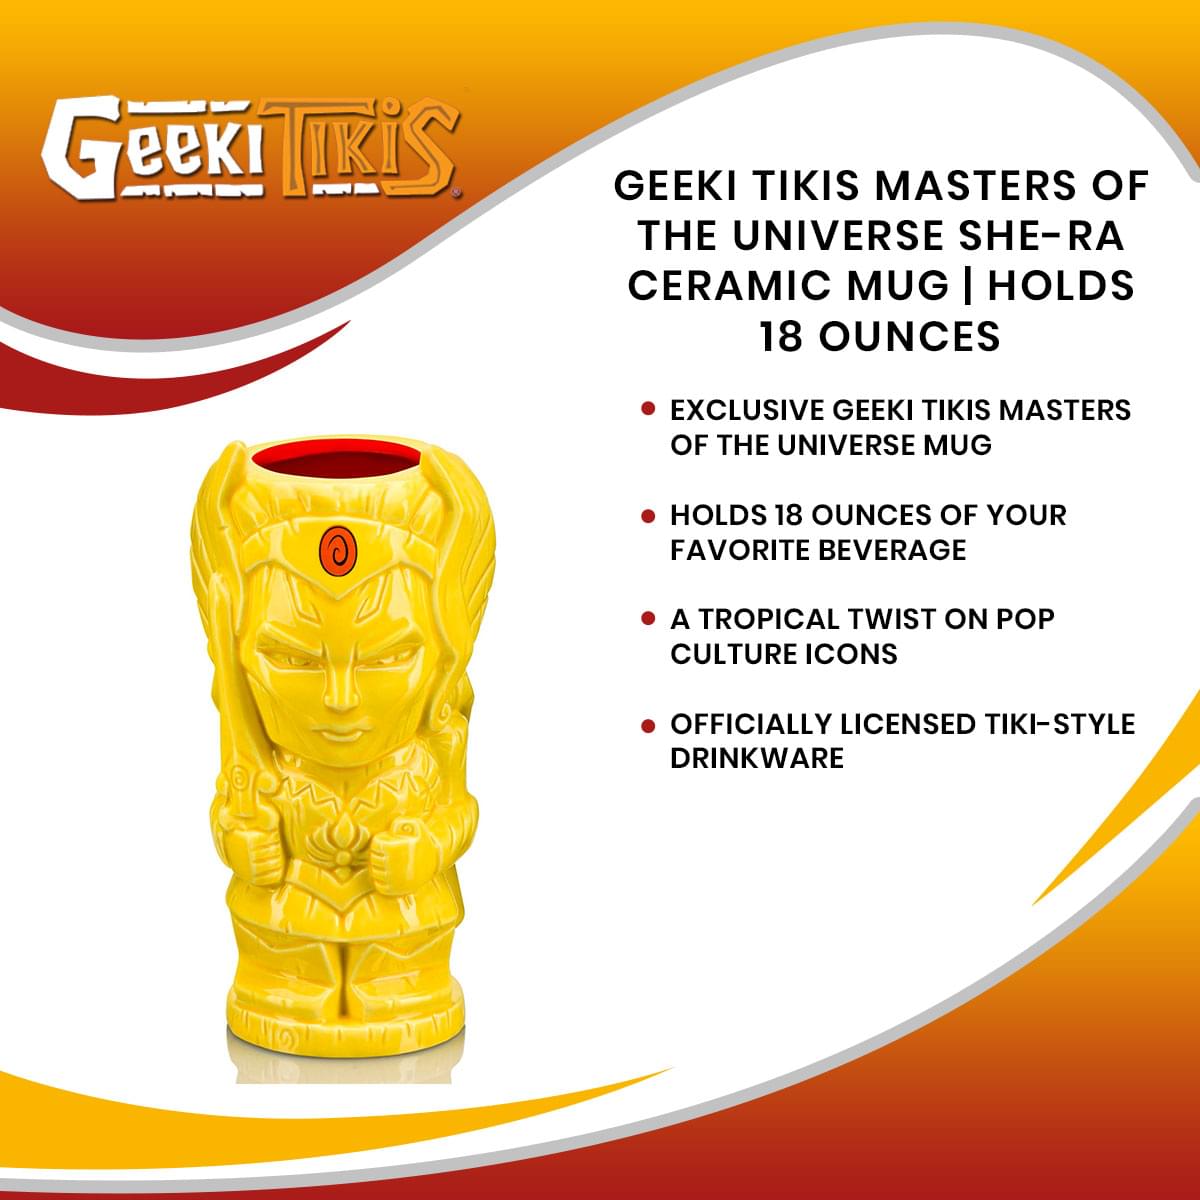 Geeki Tikis Masters of the Universe She-Ra Ceramic Mug | Holds 18 Ounces